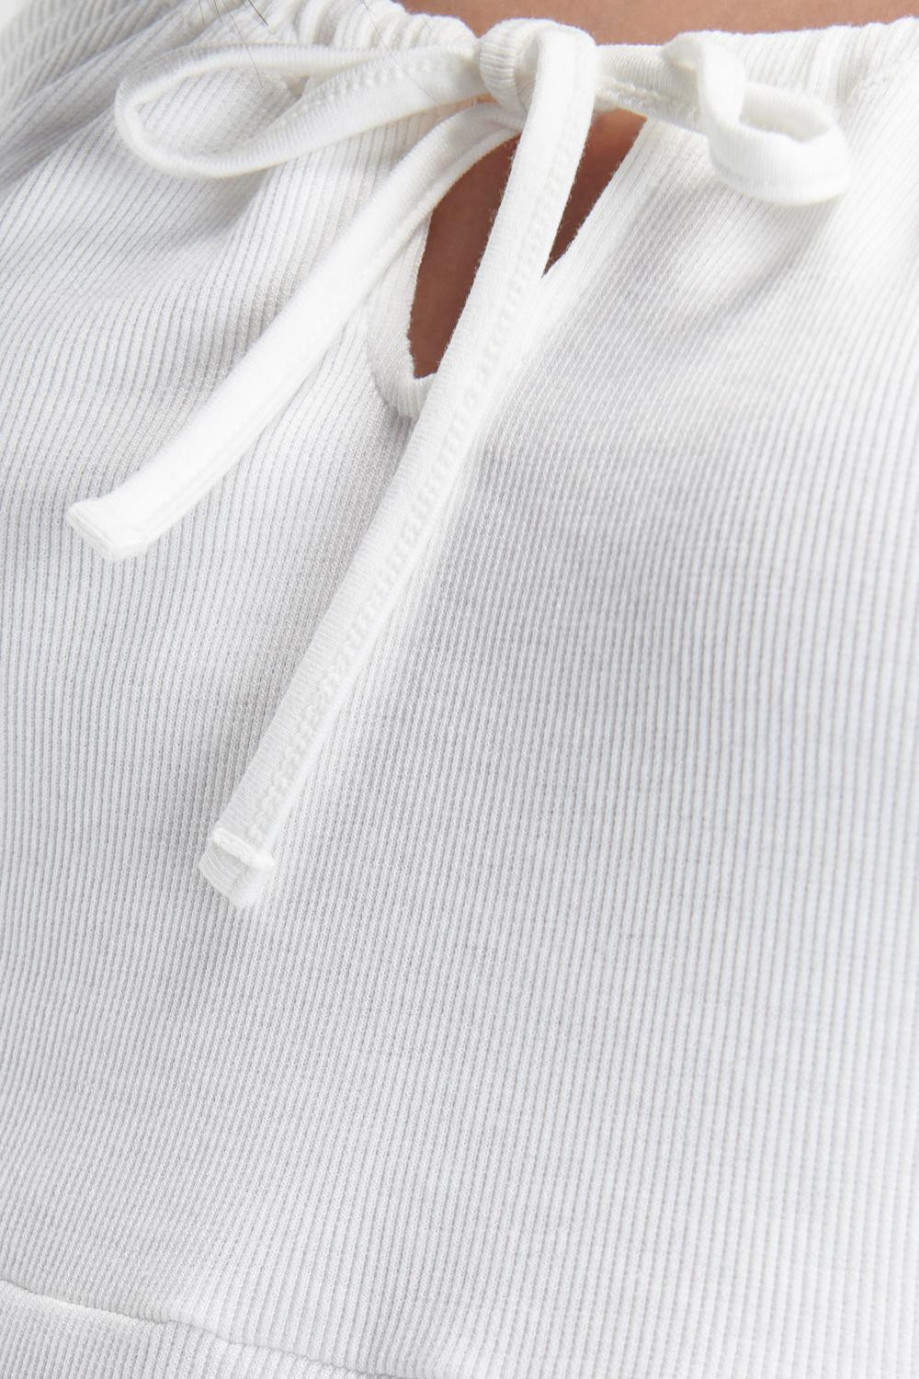 Camiseta manga corta con escote en frente